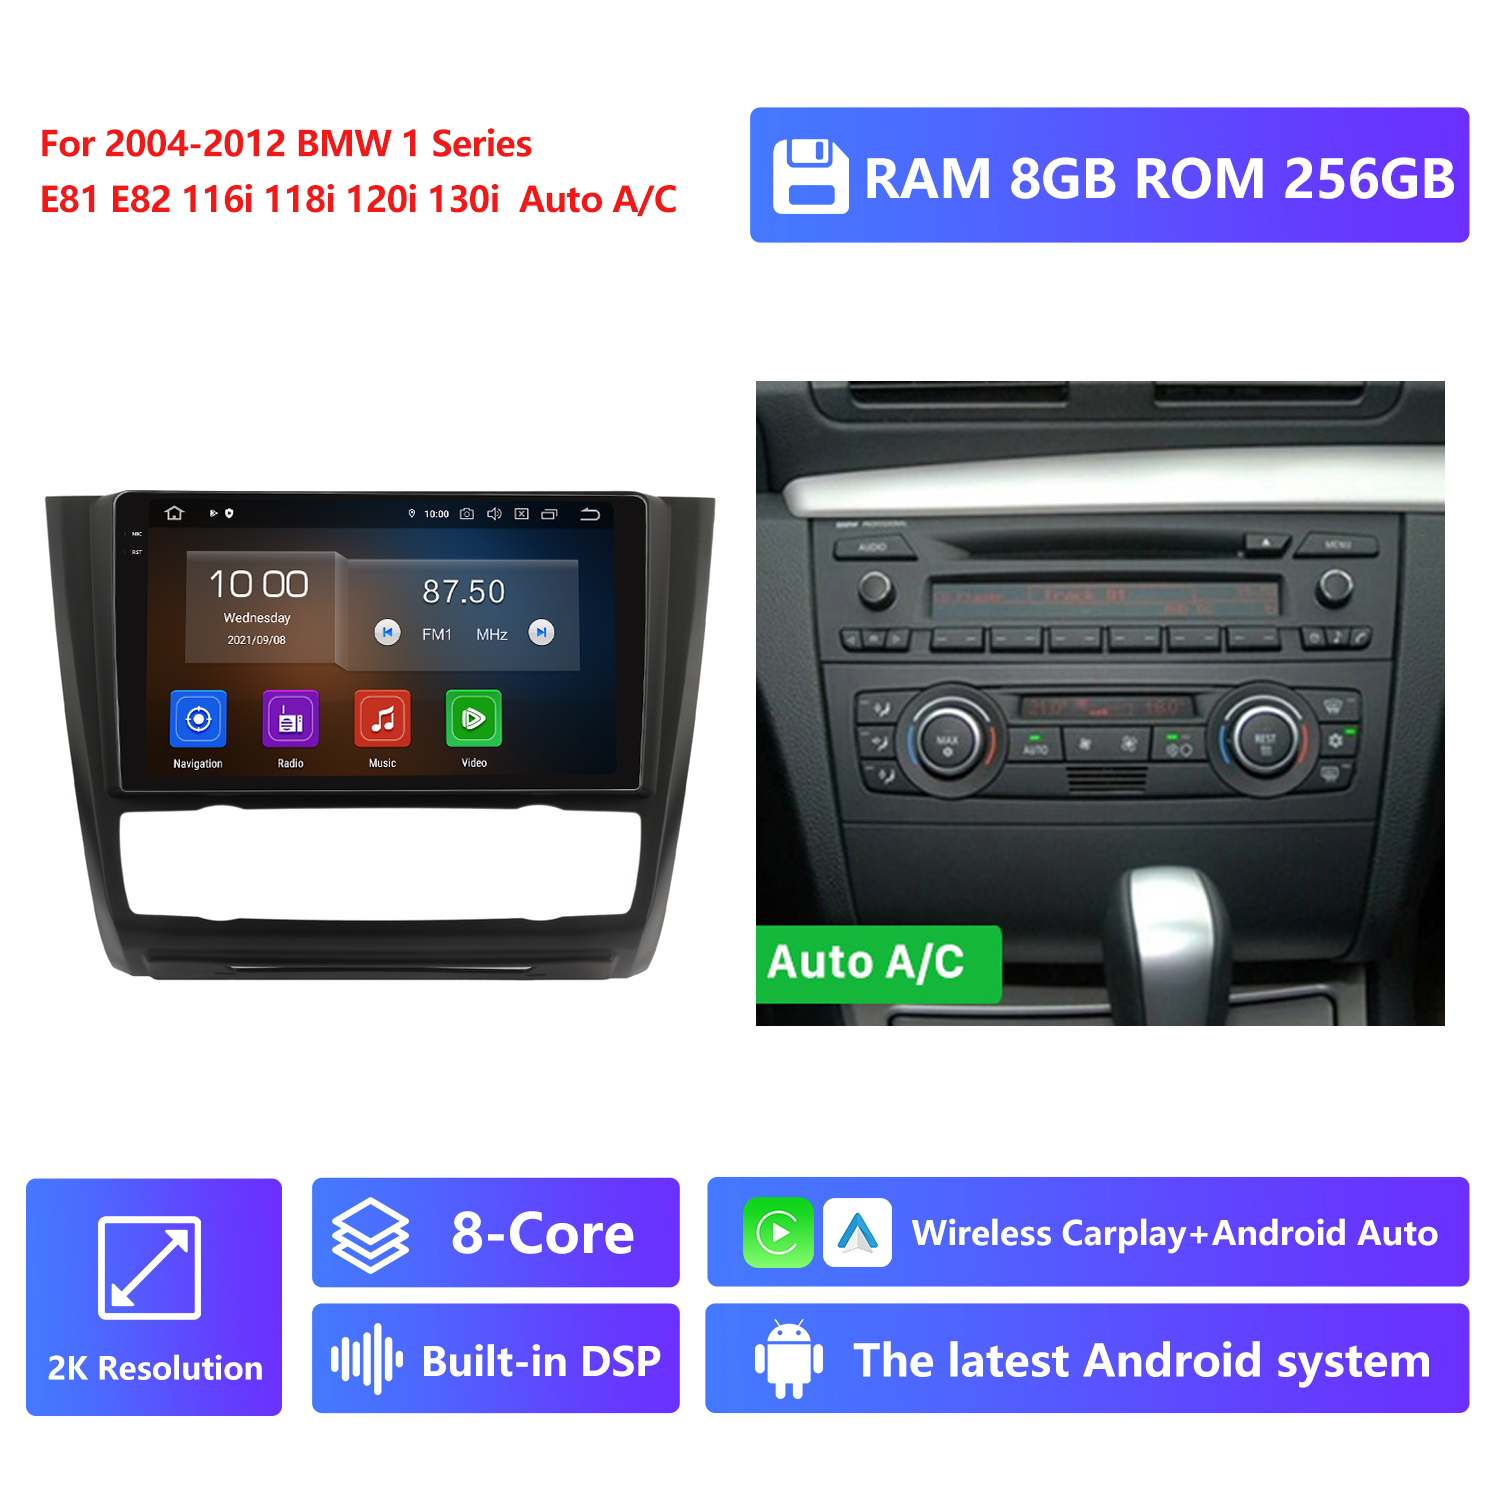 RAM 8G,ROM 256G 2K Resolution,Auto A/C